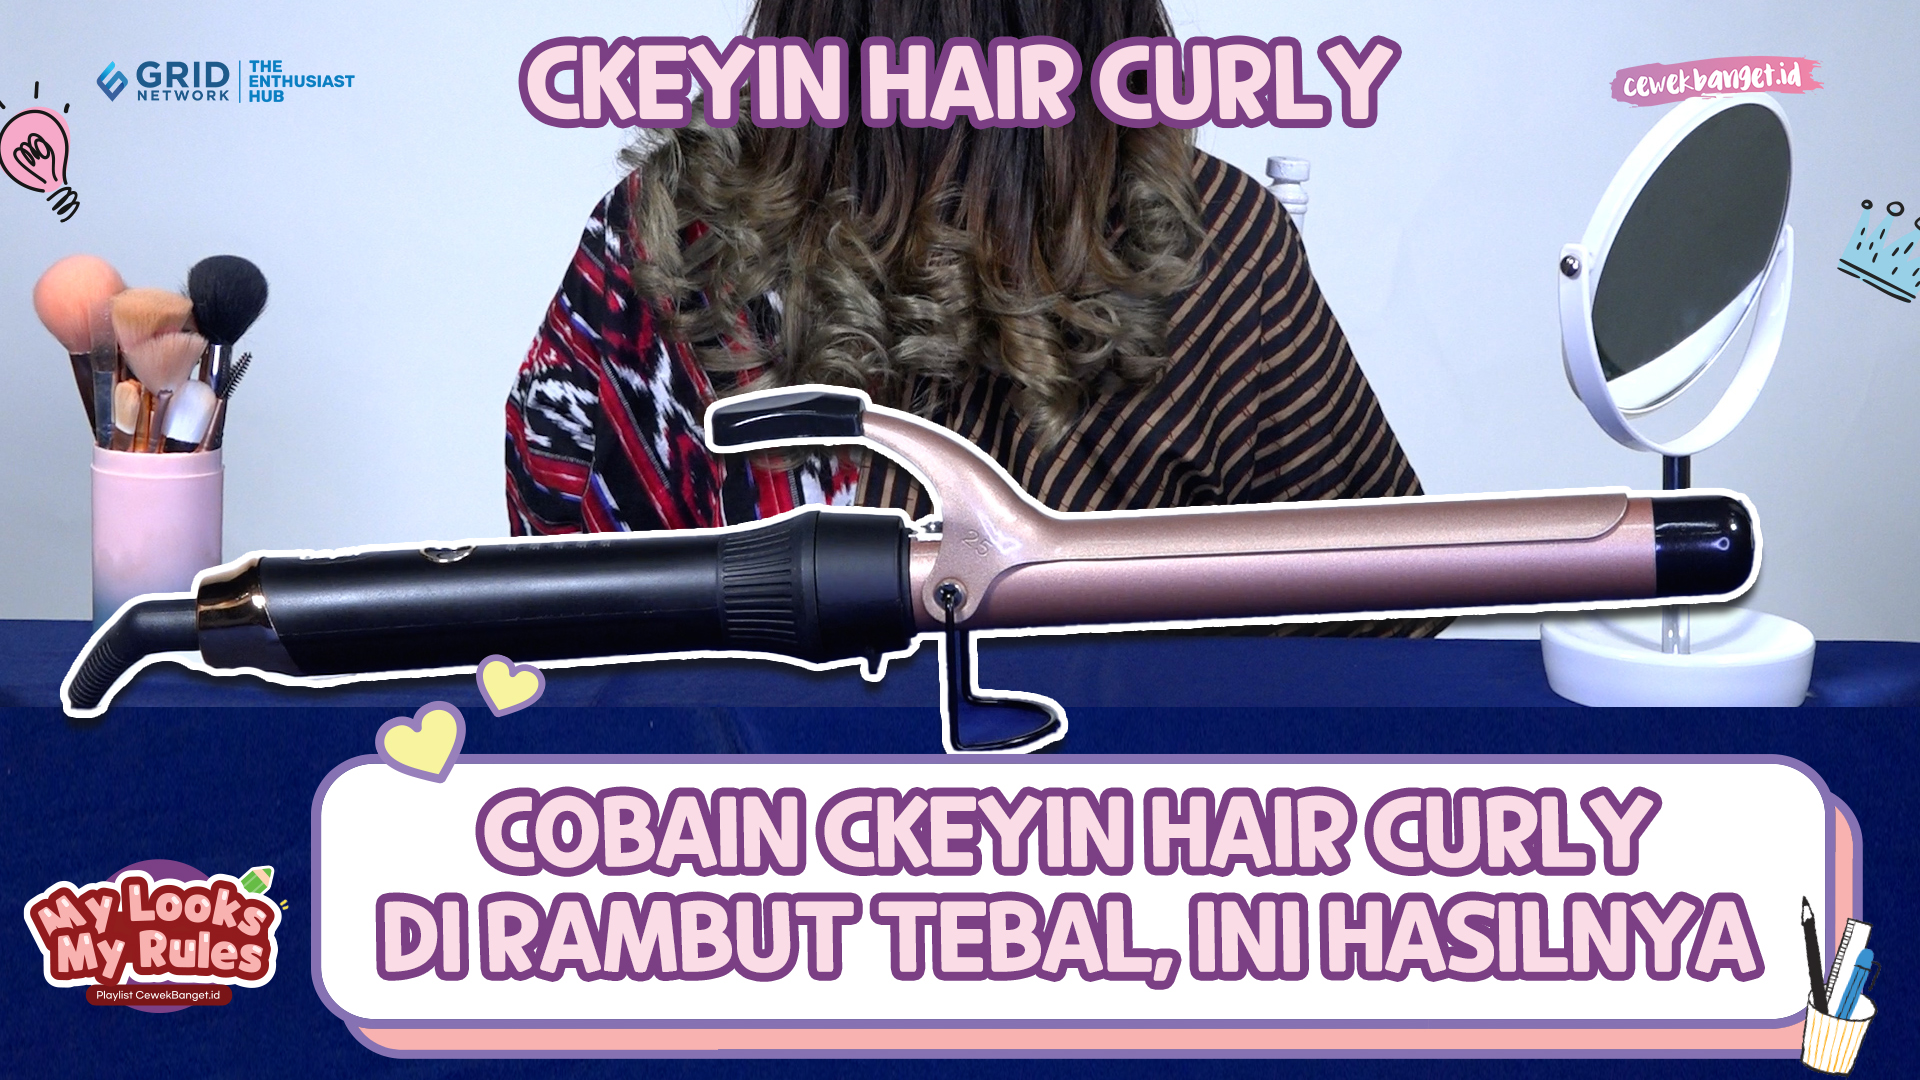 REVIEW CKEYIN HAIR CURLY DI RAMBUT TEBAL, TEST DIPAKAI SEHARIAN!